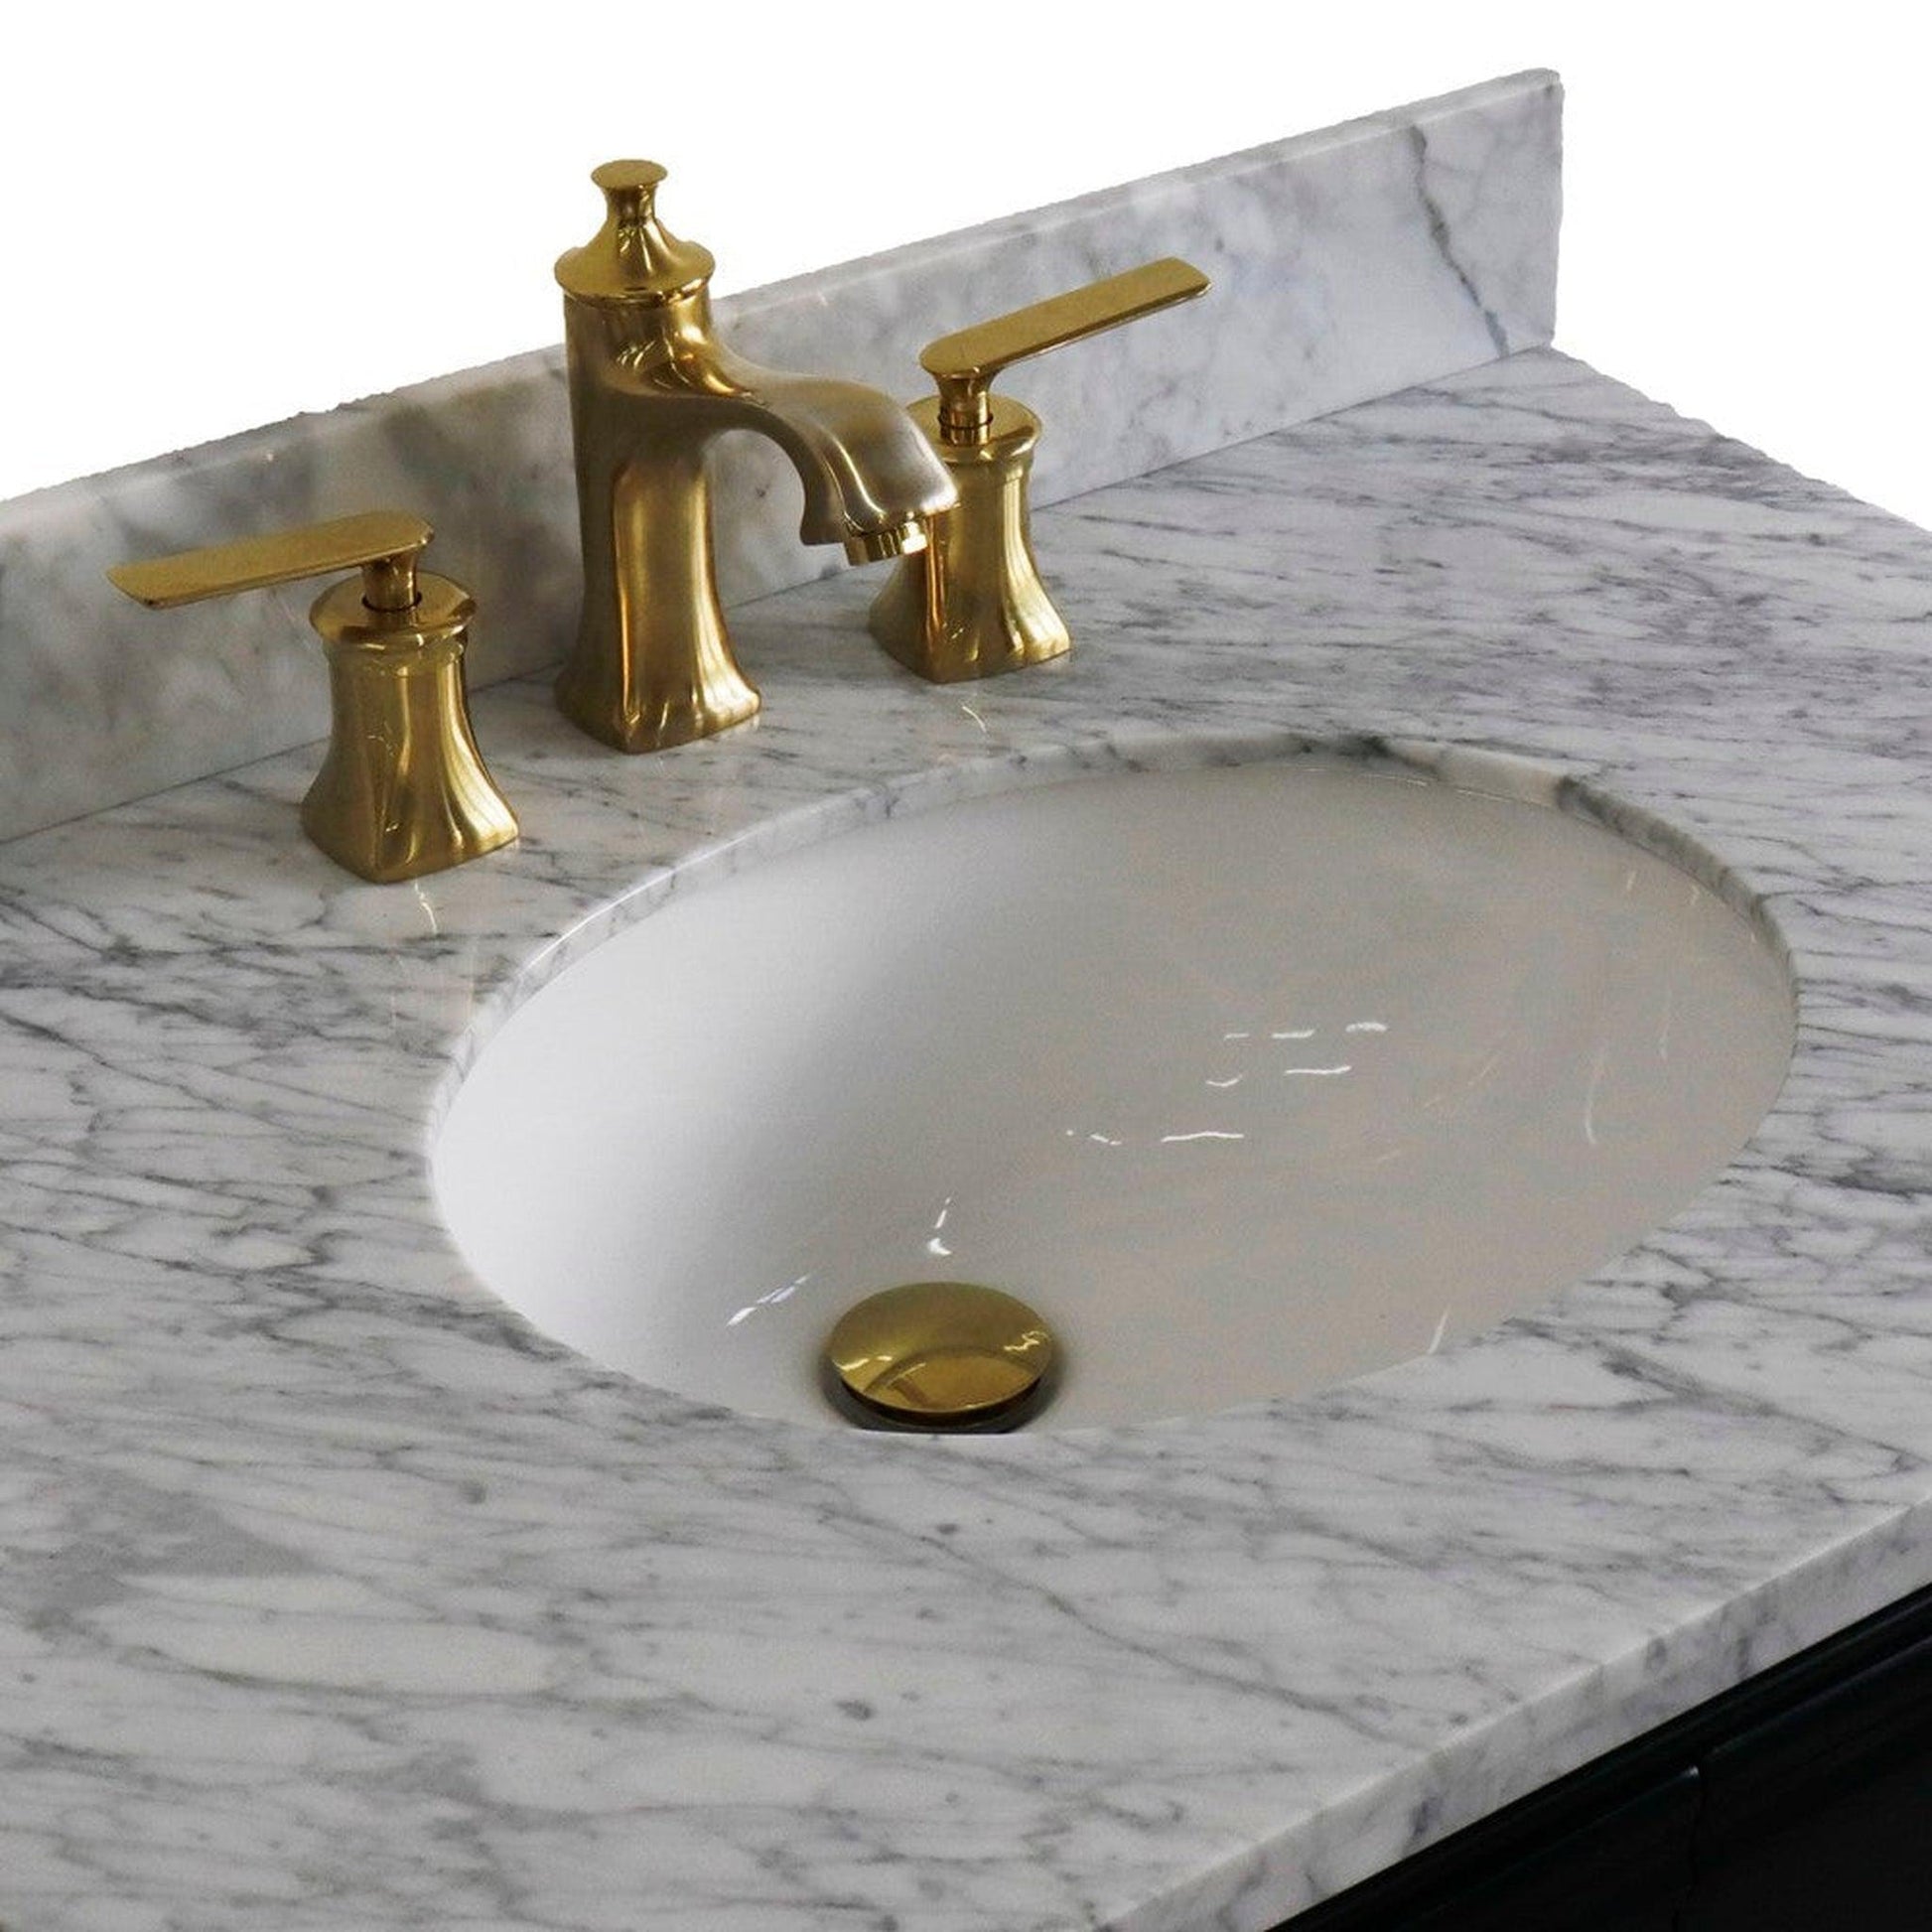 Bellaterra Home Forli 31" 2-Door 1-Drawer Dark Gray Freestanding Vanity Set With Ceramic Undermount Oval Sink And White Carrara Marble Top